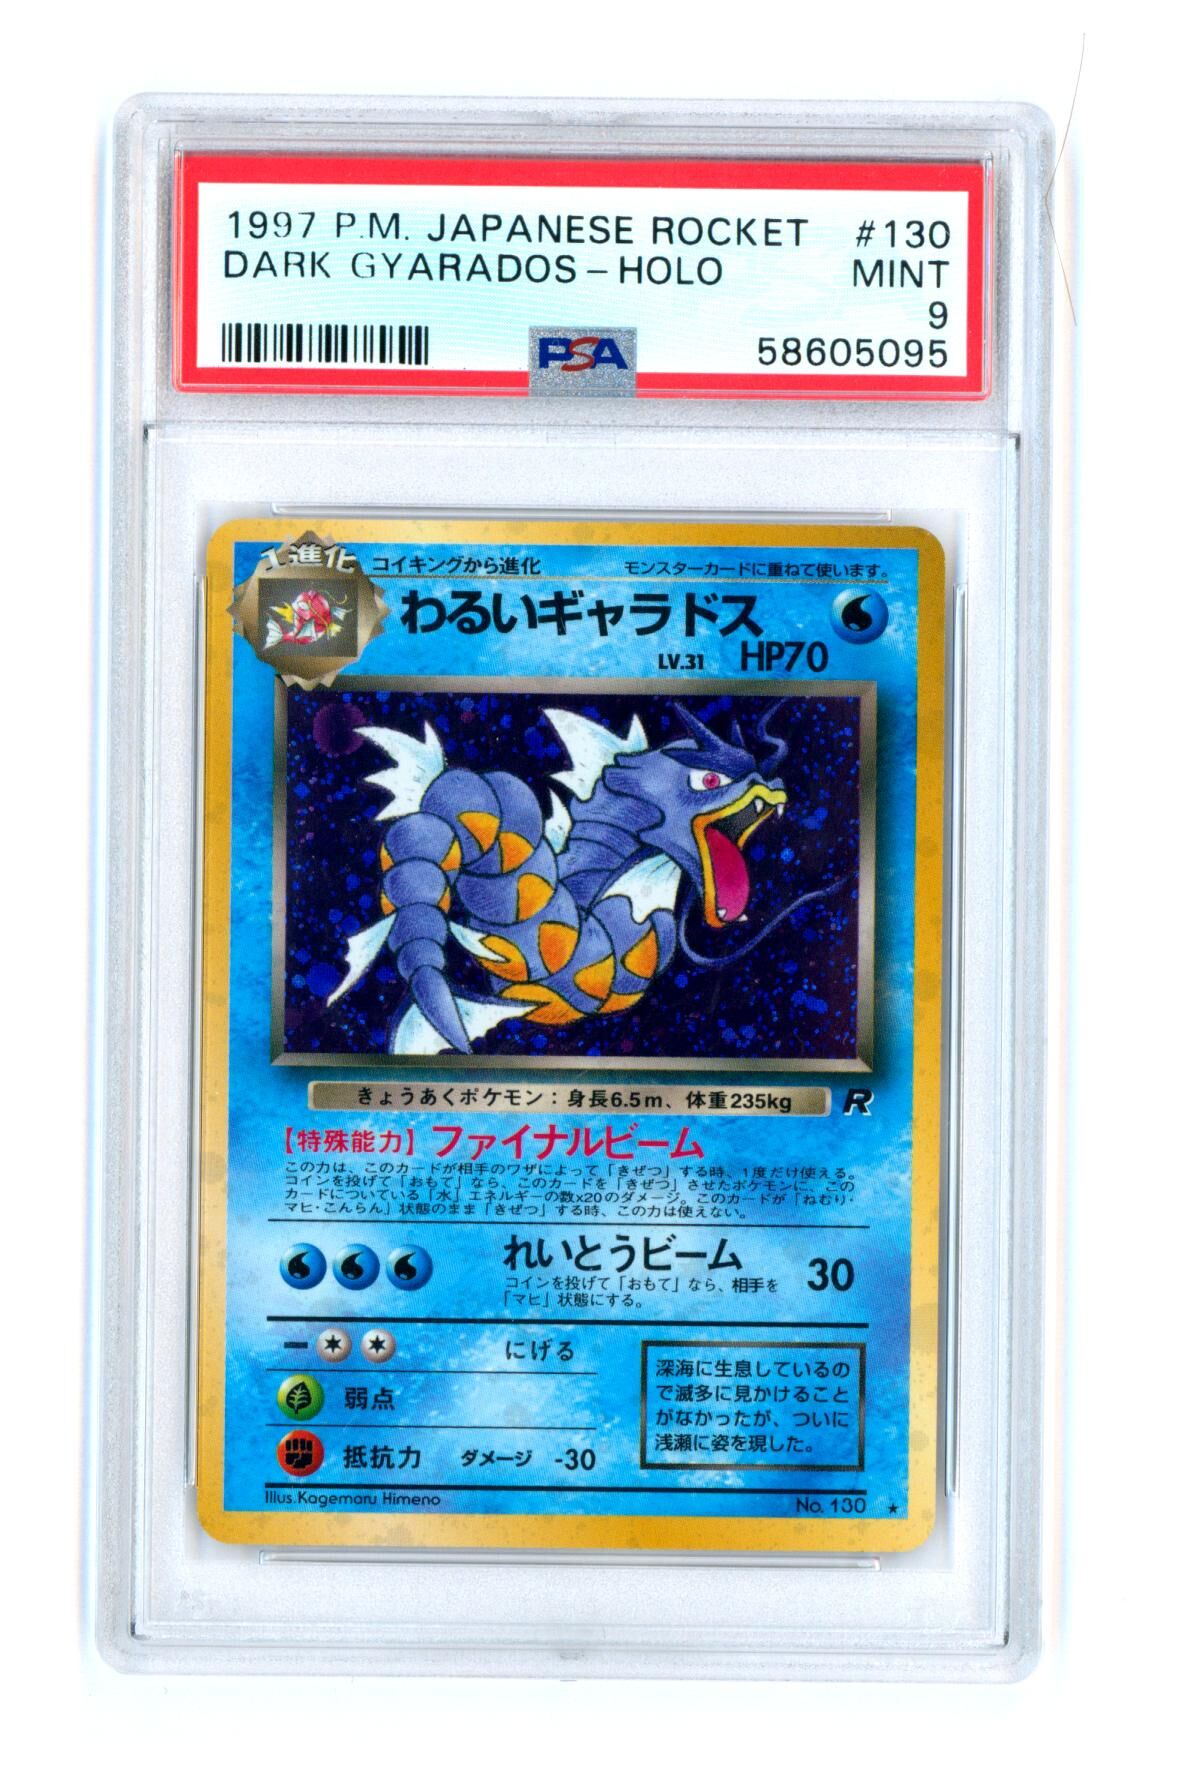 Dark Gyarados #130 - Japanese Rocket - Holo - PSA 9 MINT - Pokémon